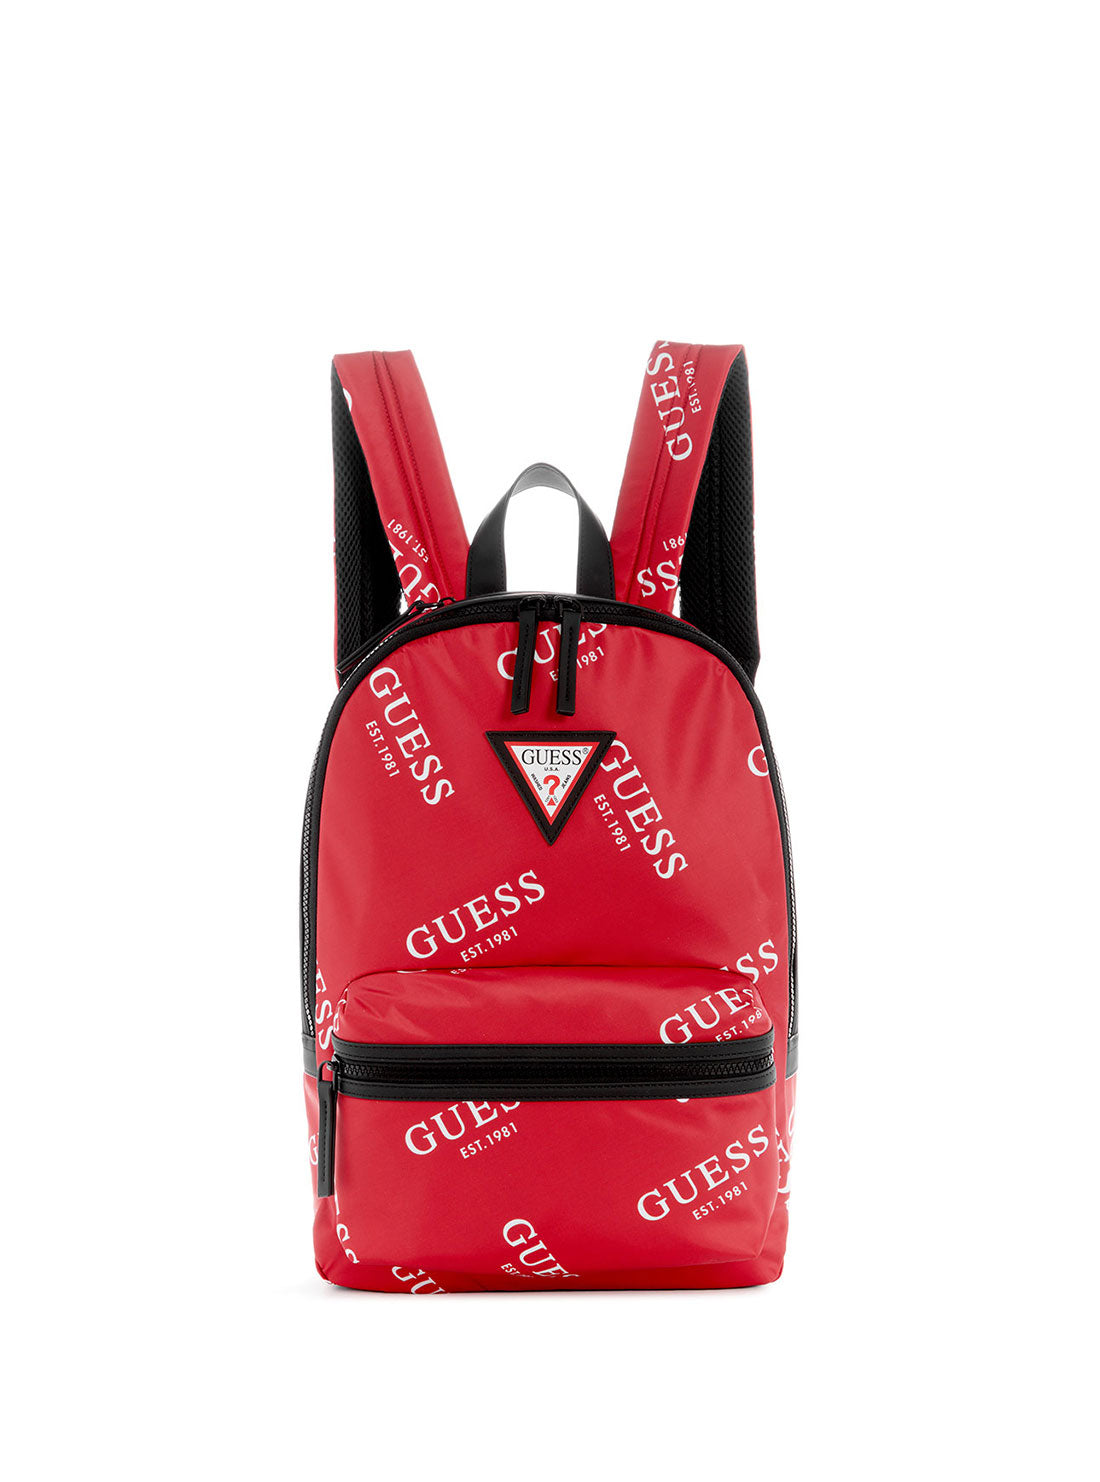 GUESS Men's Red Logo Originals Backpack TL703198 Front View